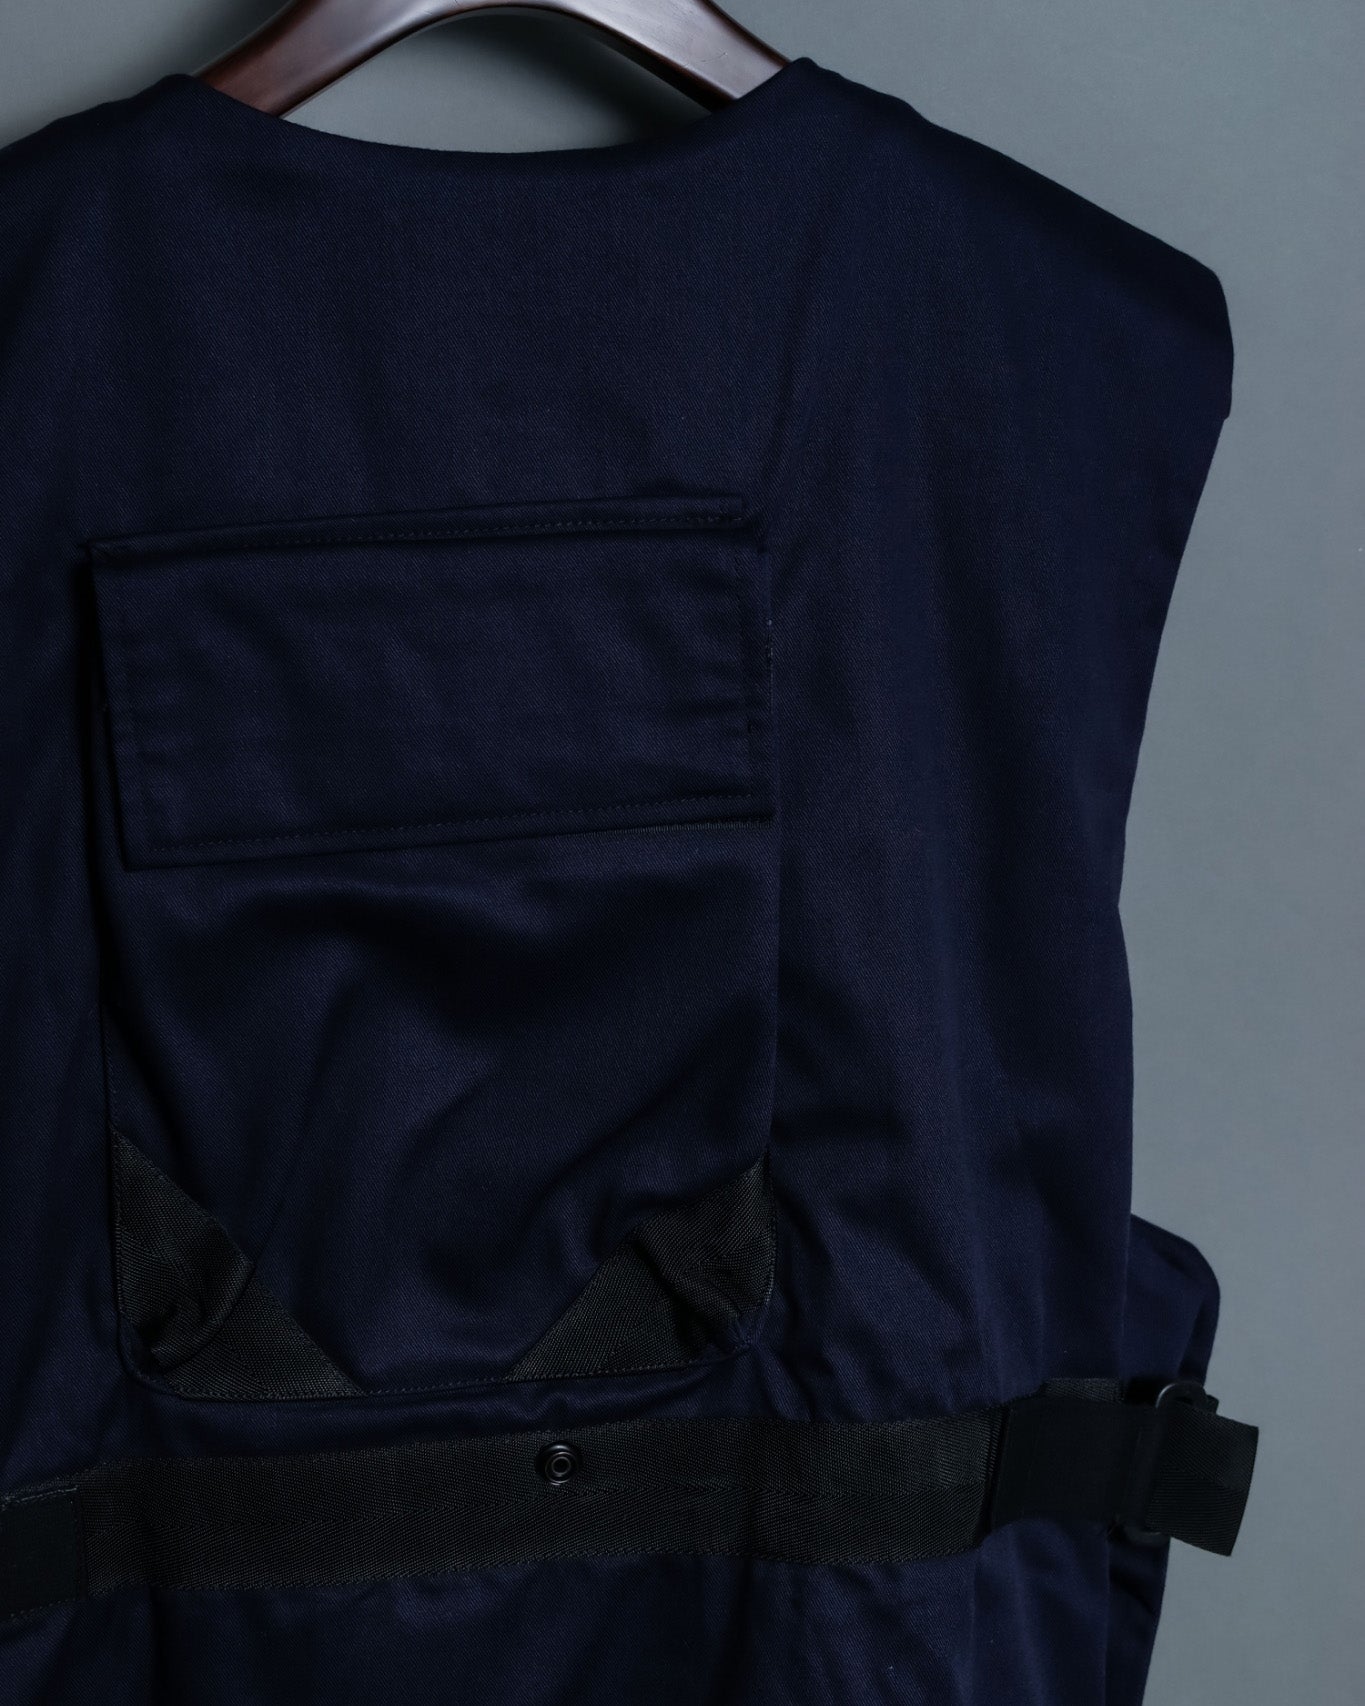 Vintage Navy Blue Body Armor Vest